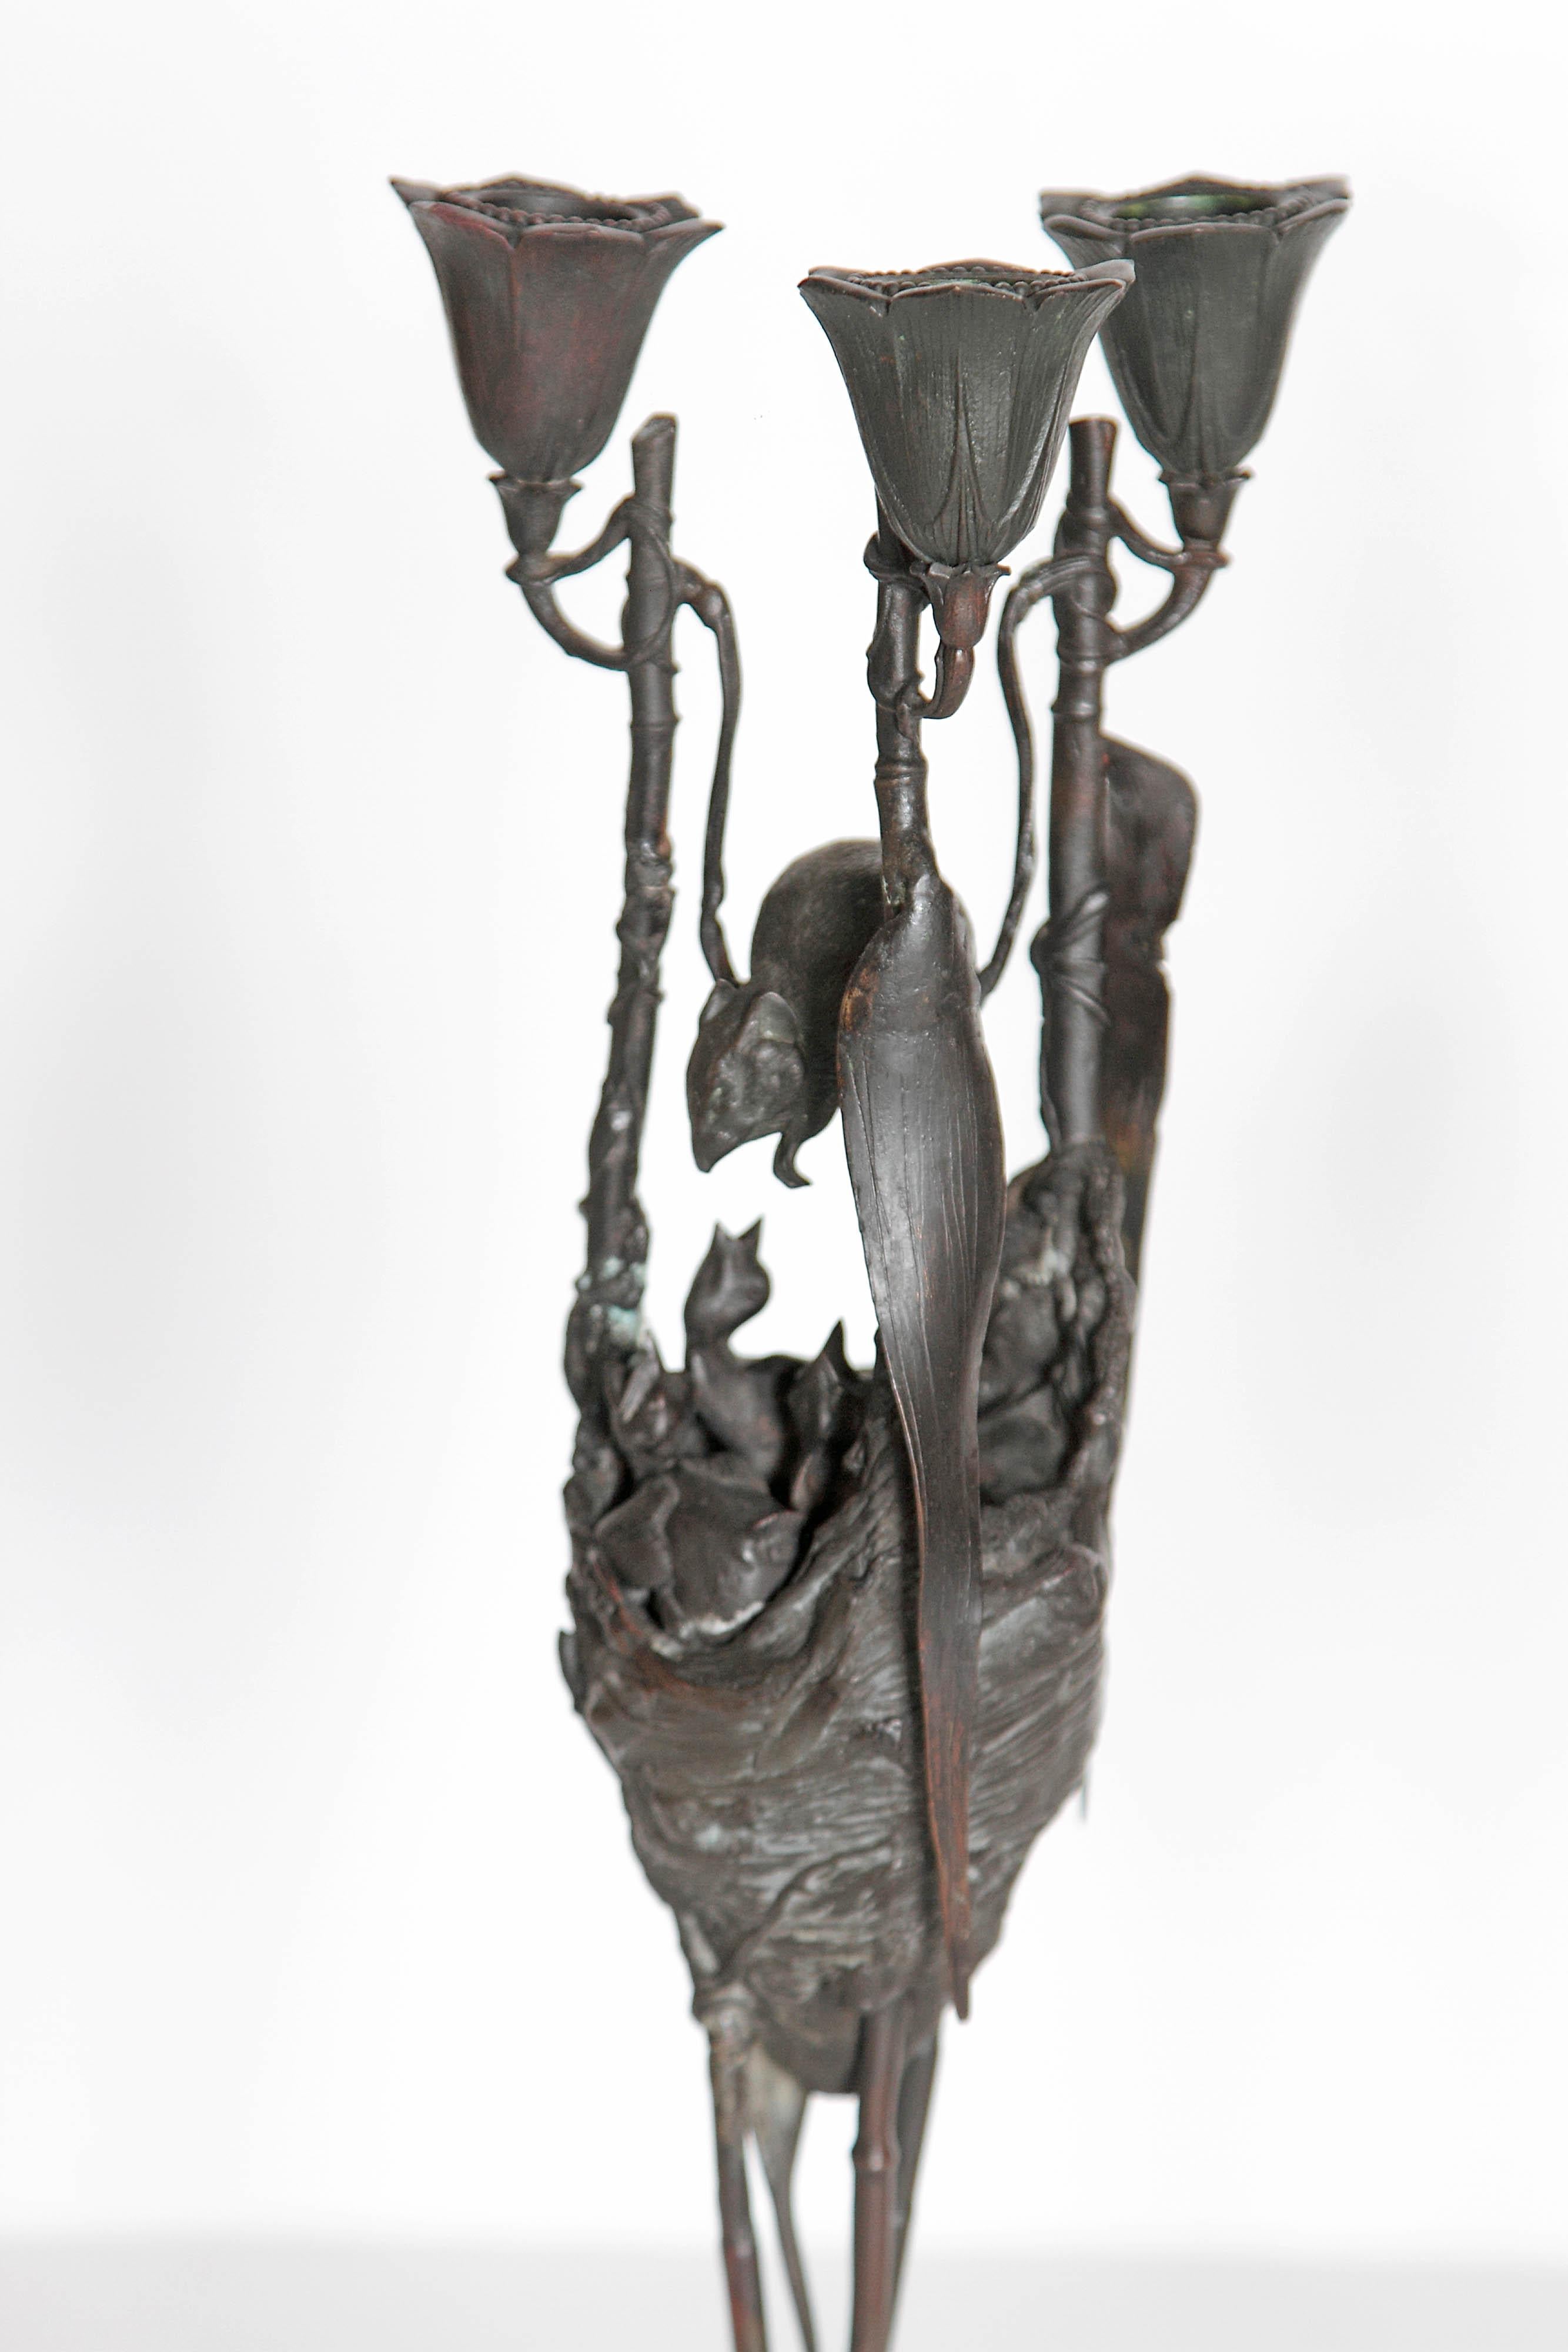 Bronze Auguste-Nicolas Cain, Pair of French Candelabra with Bird's Nest